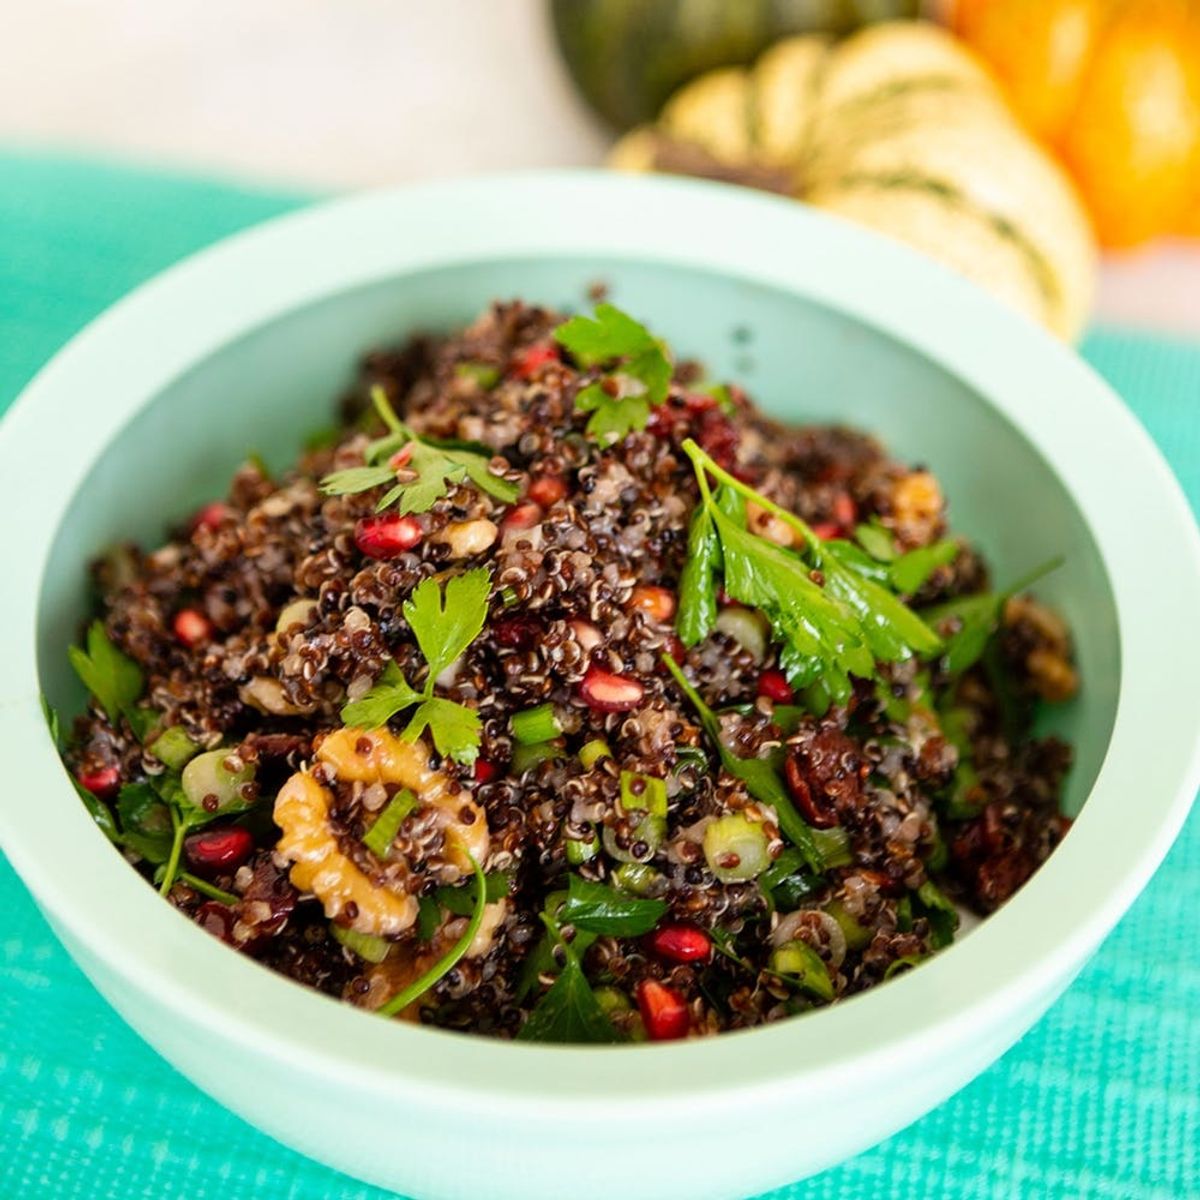 This Healthy, Fall Quinoa Salad Recipe Will Fuel You Through the Holiday Season